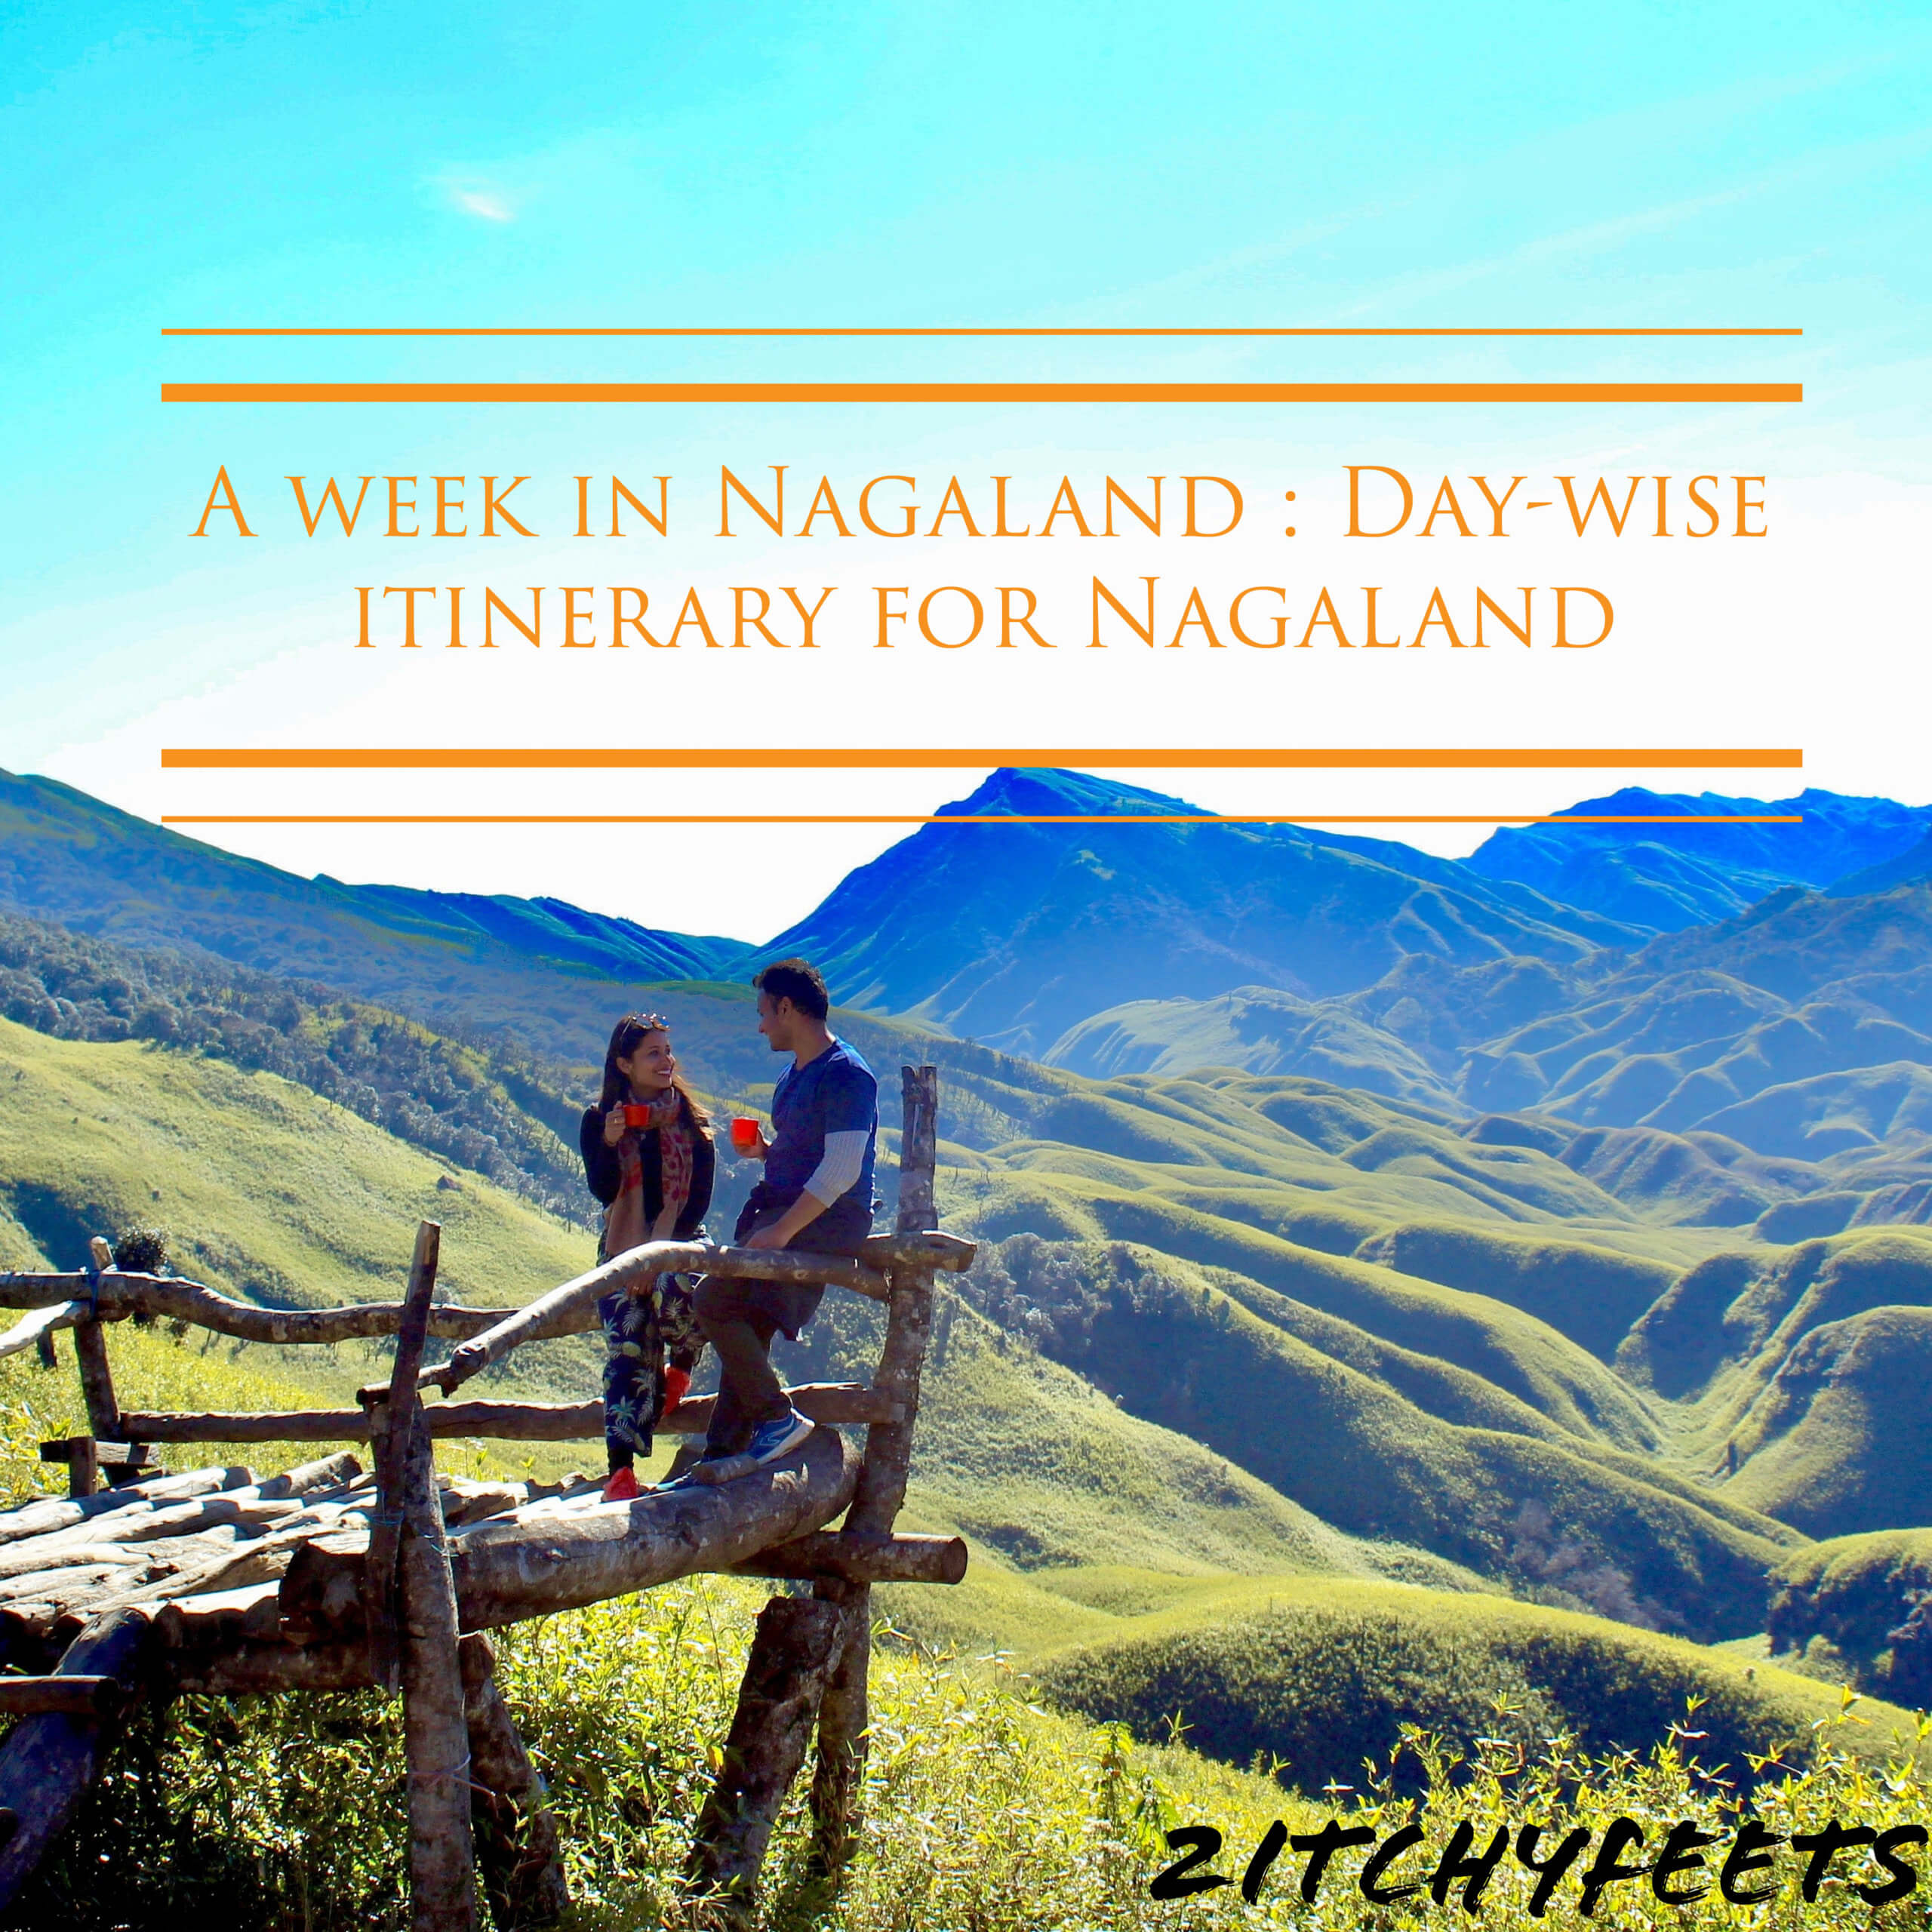 A week in Nagaland